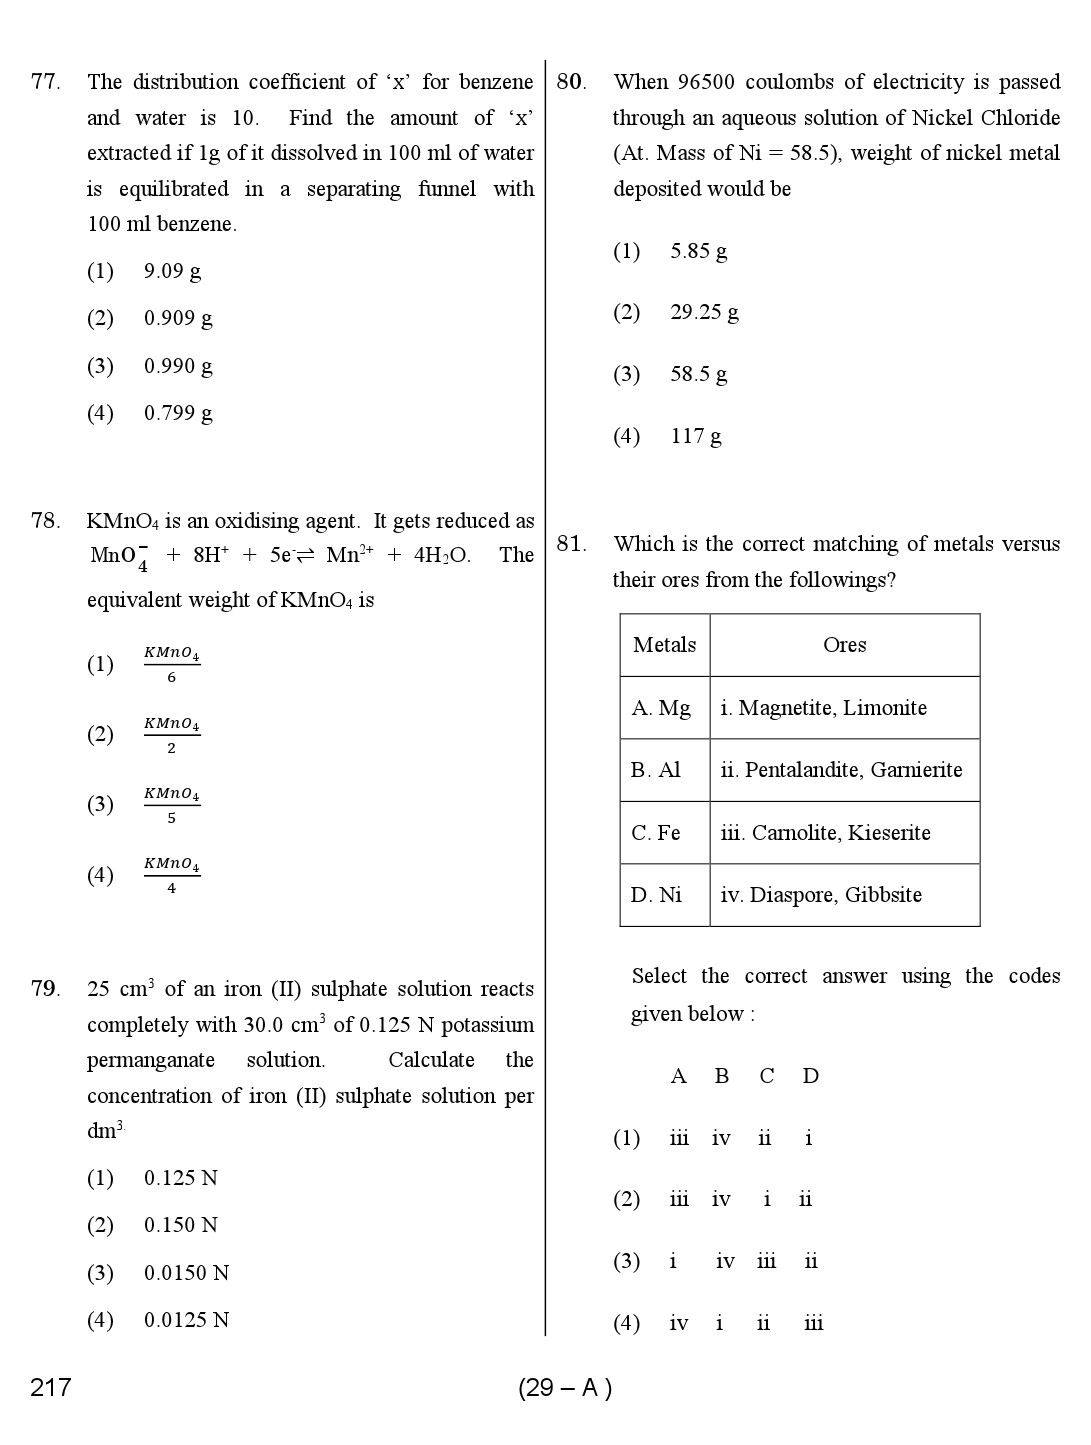 Karnataka PSC Chemist Exam Sample Question Paper 29